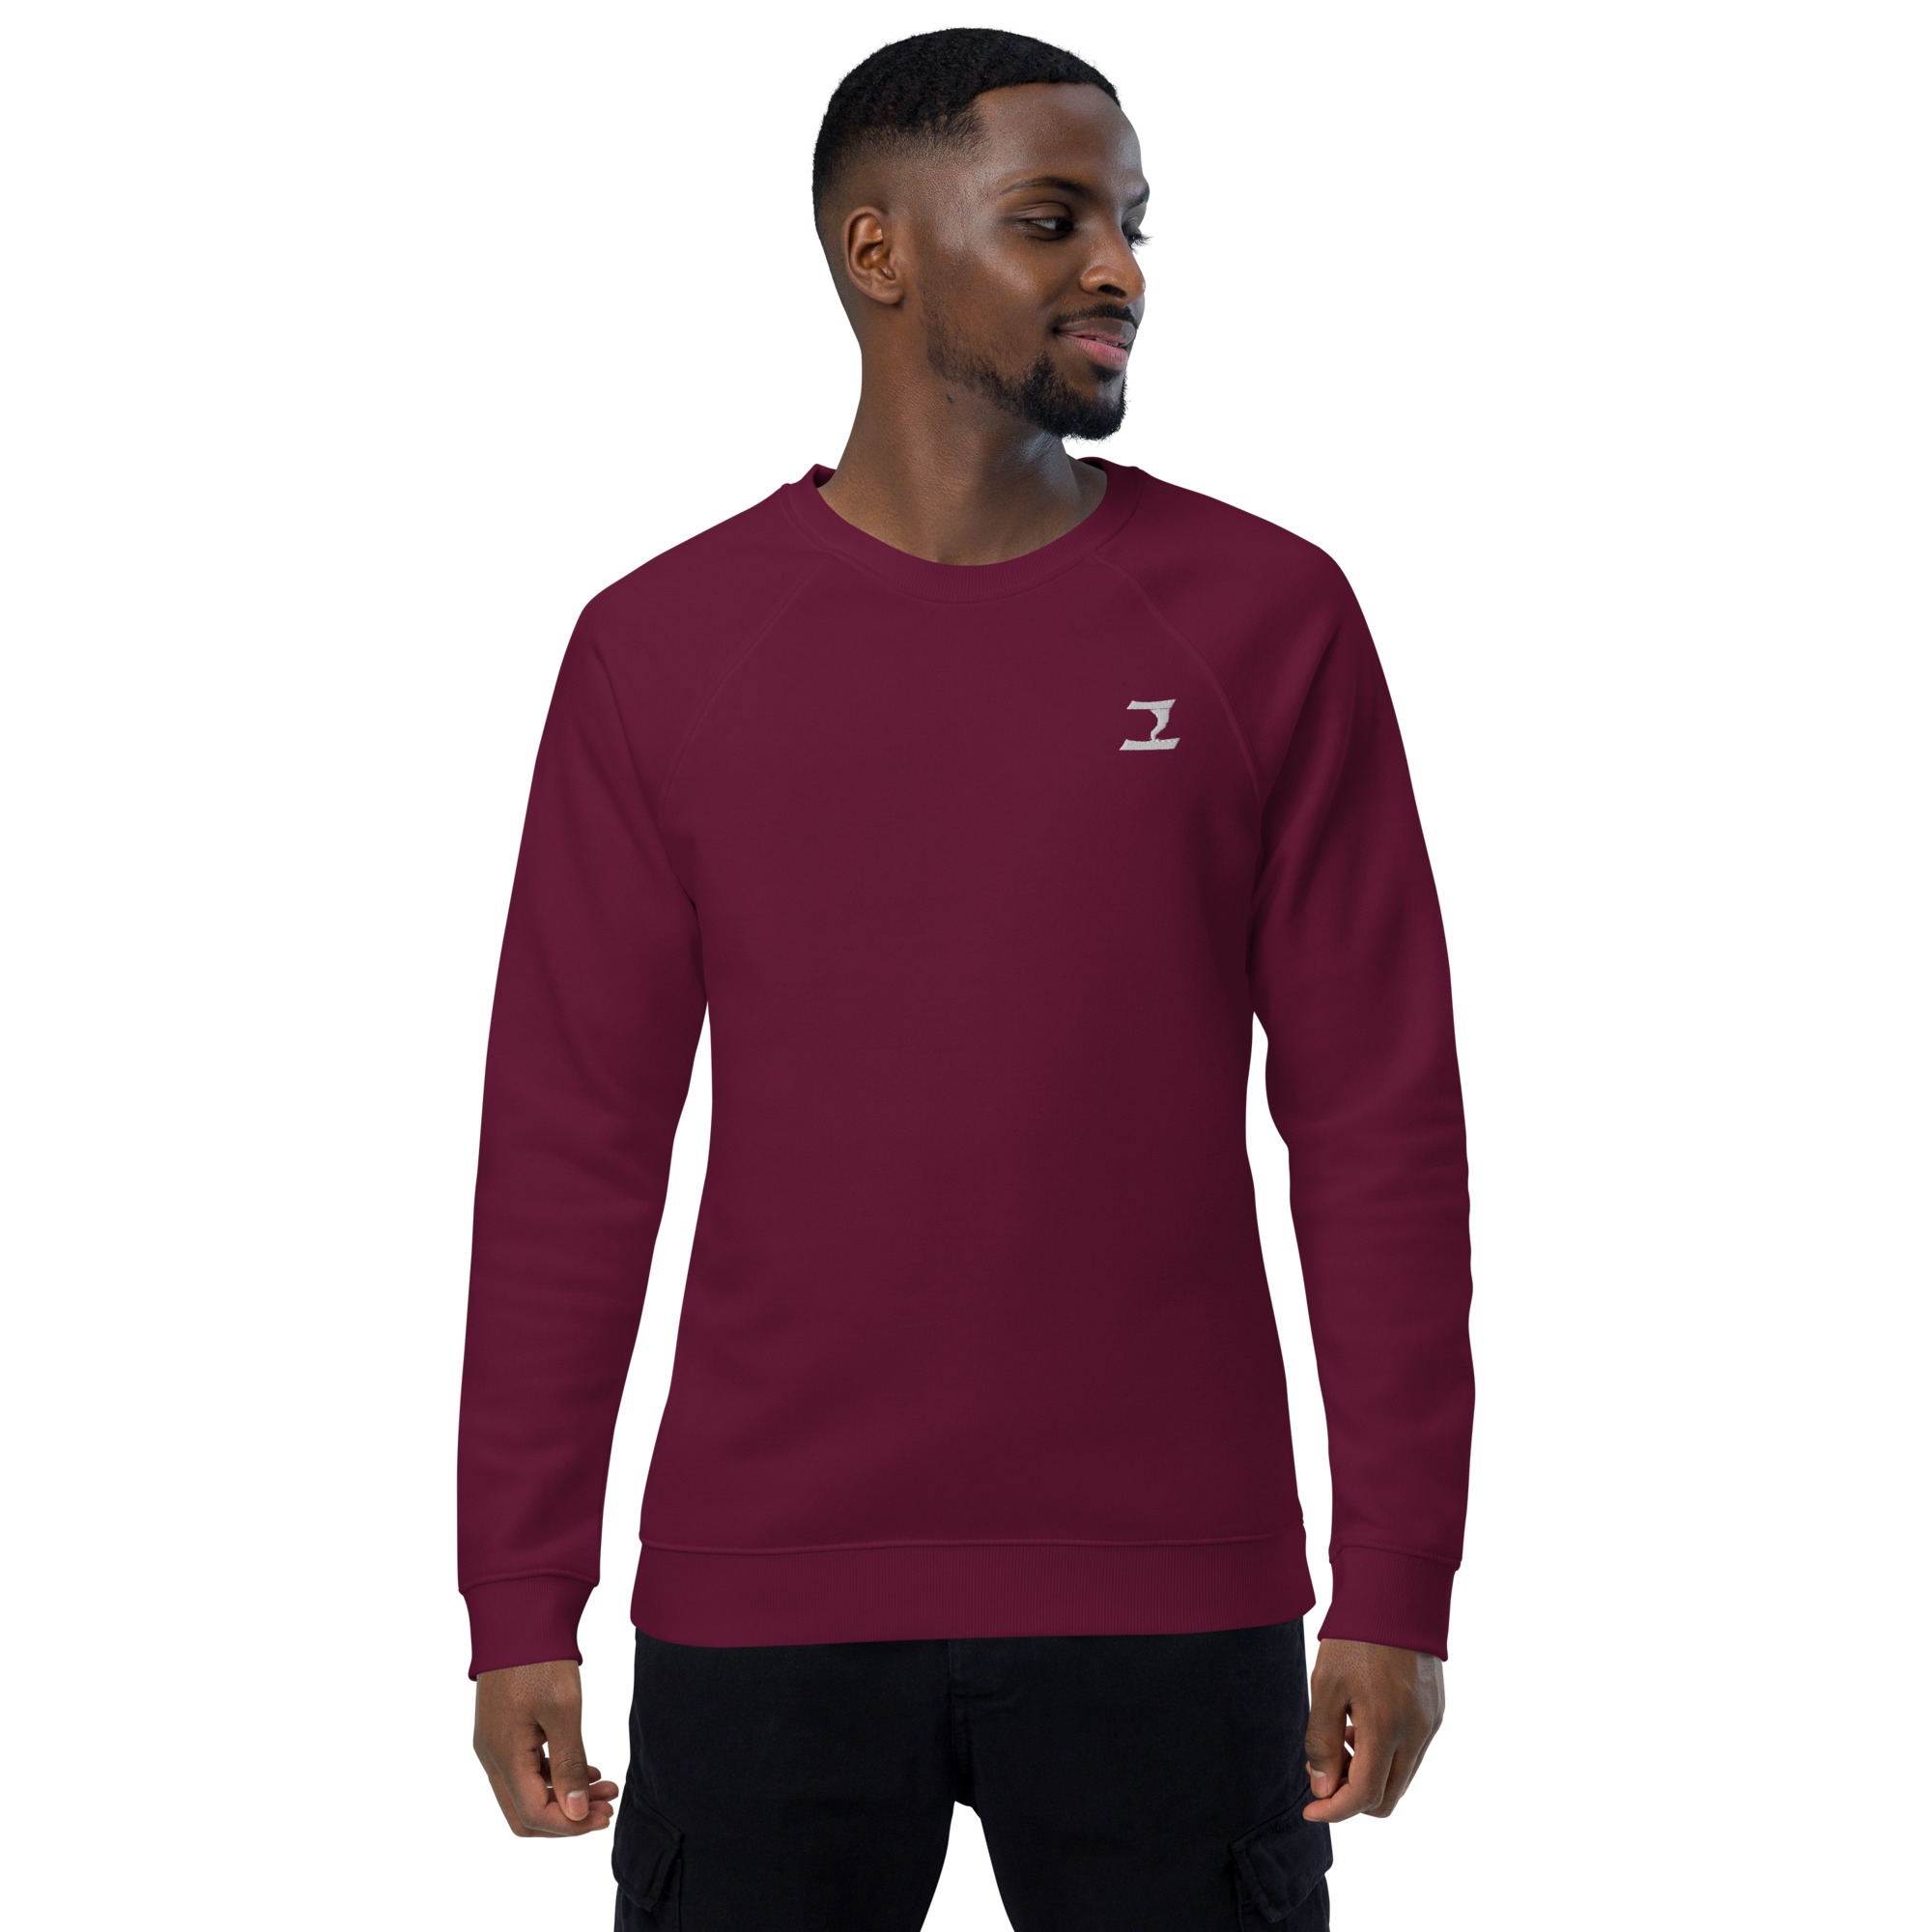 unisex-organic-raglan-sweatshirt-burgundy-front-6334e2624b0b7.jpg